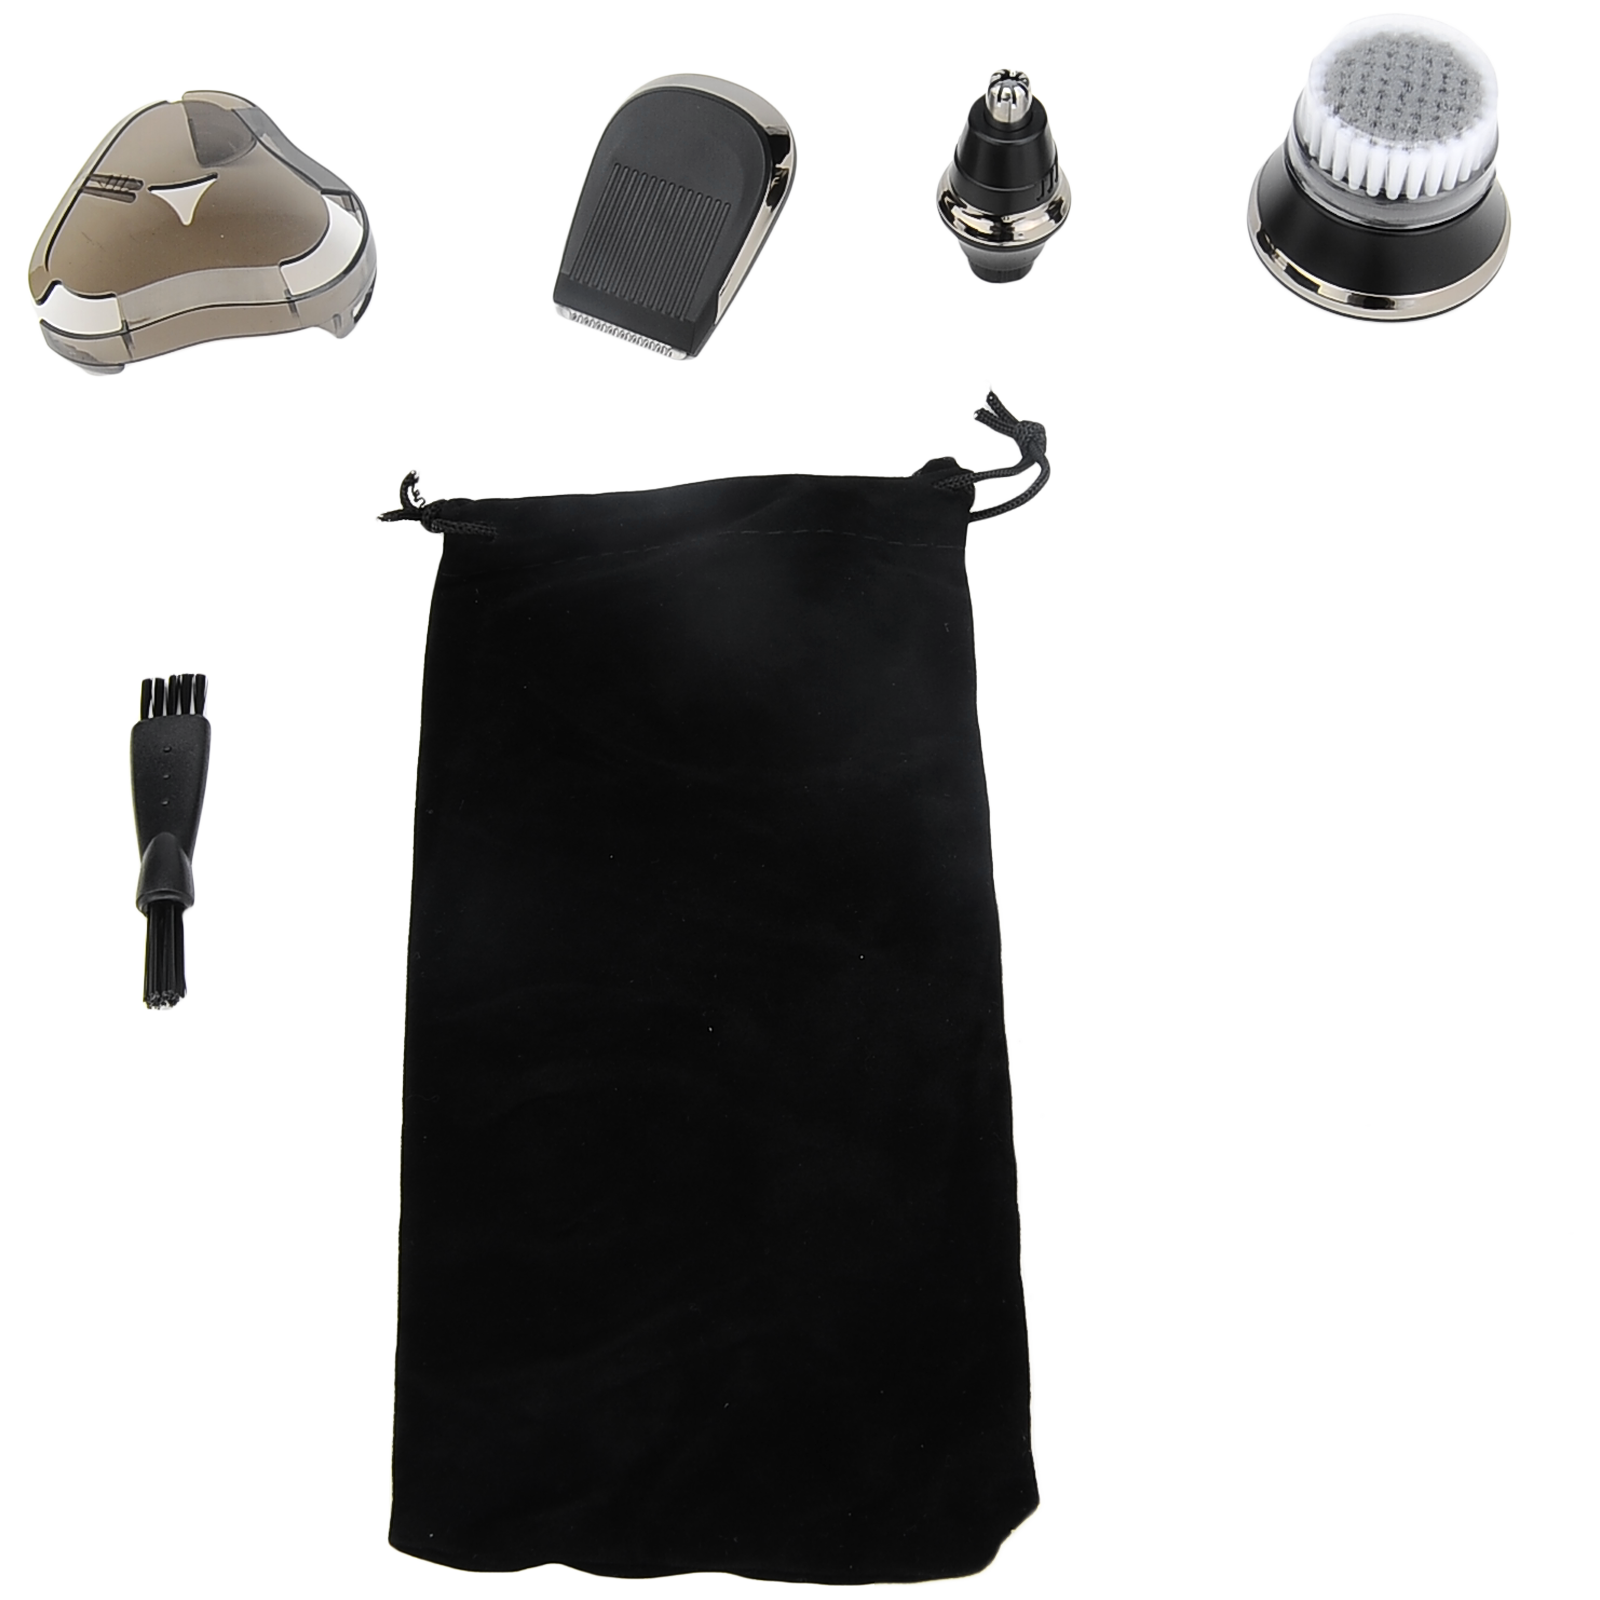 Swiss Military Grooming Kit for SHV-6 Trimmer (Flex Head, SHV6ACC, Black)